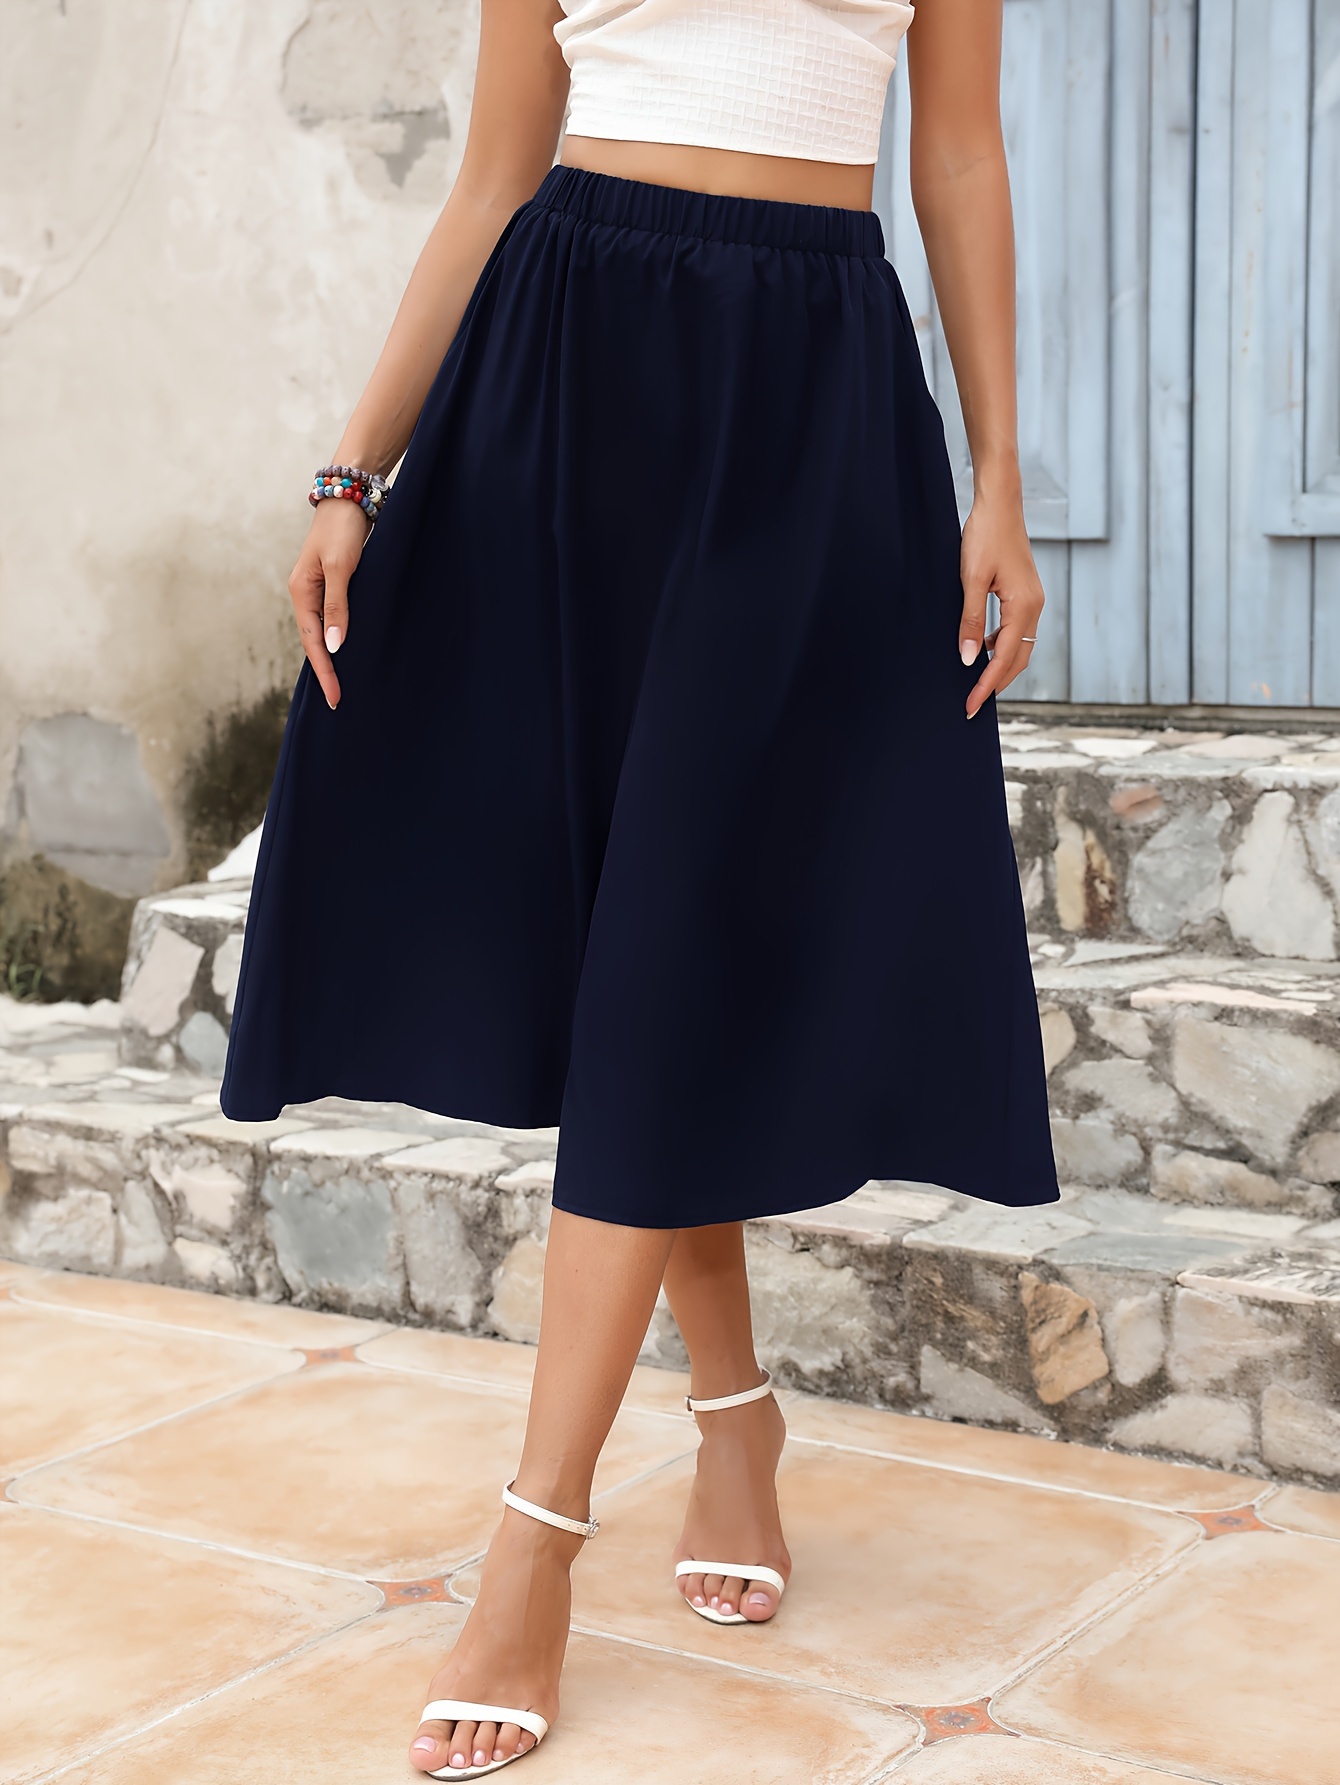 Buy Lyrur Women's Floral Midi Skirt with Pockets High Elastic